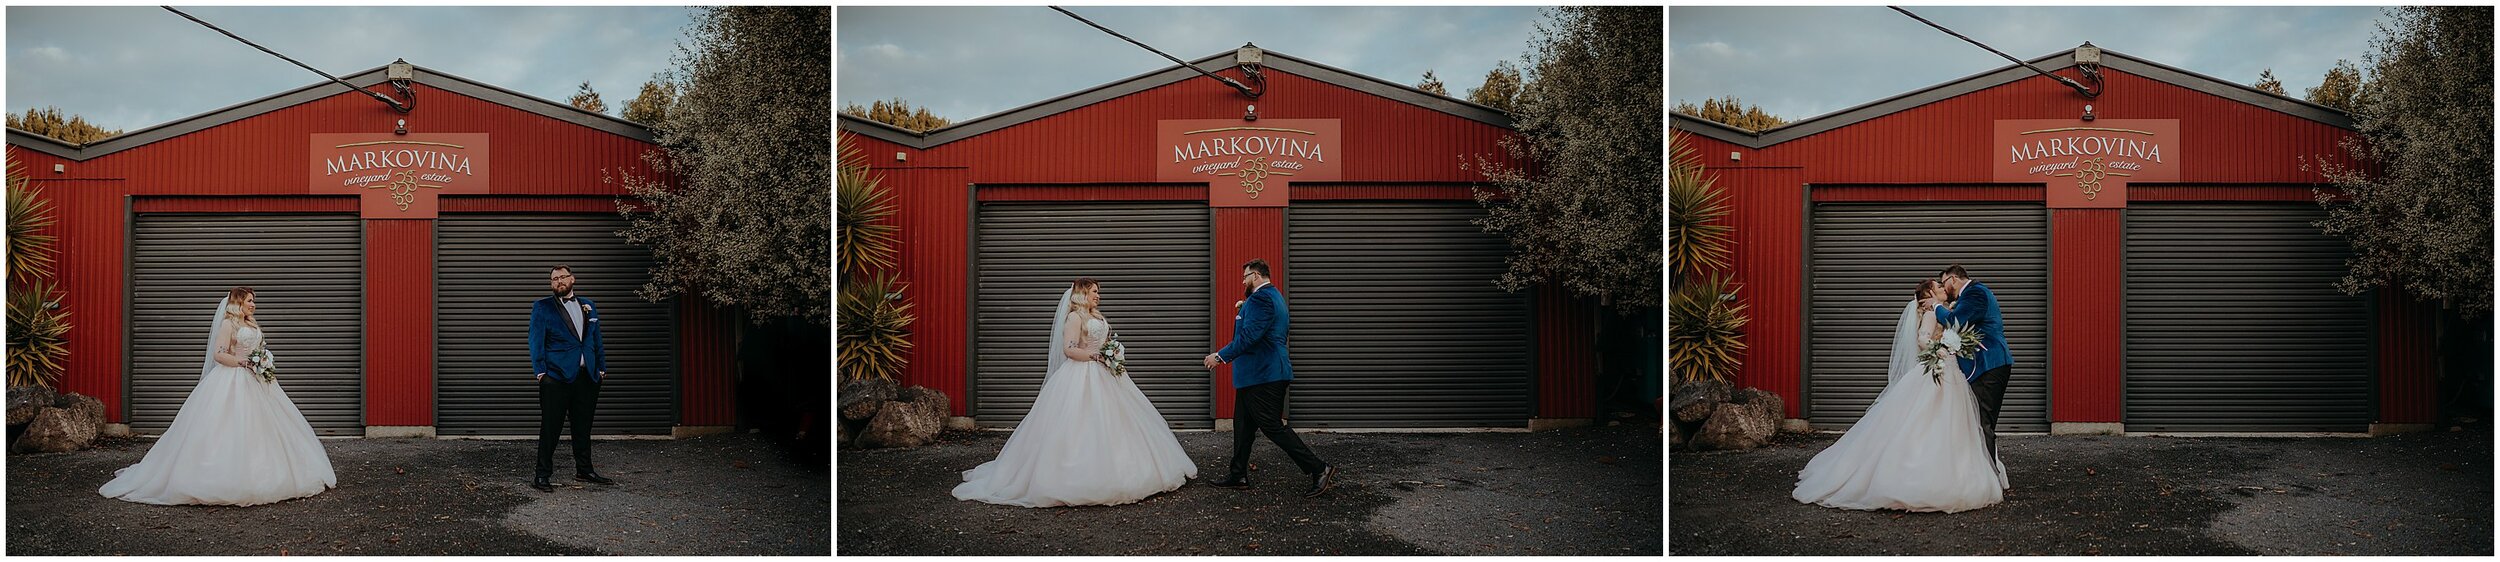 Kouki+Auckland+Wedding+Photographer+New+Zealand+Queenstown+Wedding+Elopement+NZ+Markovina+estate_0065.jpg